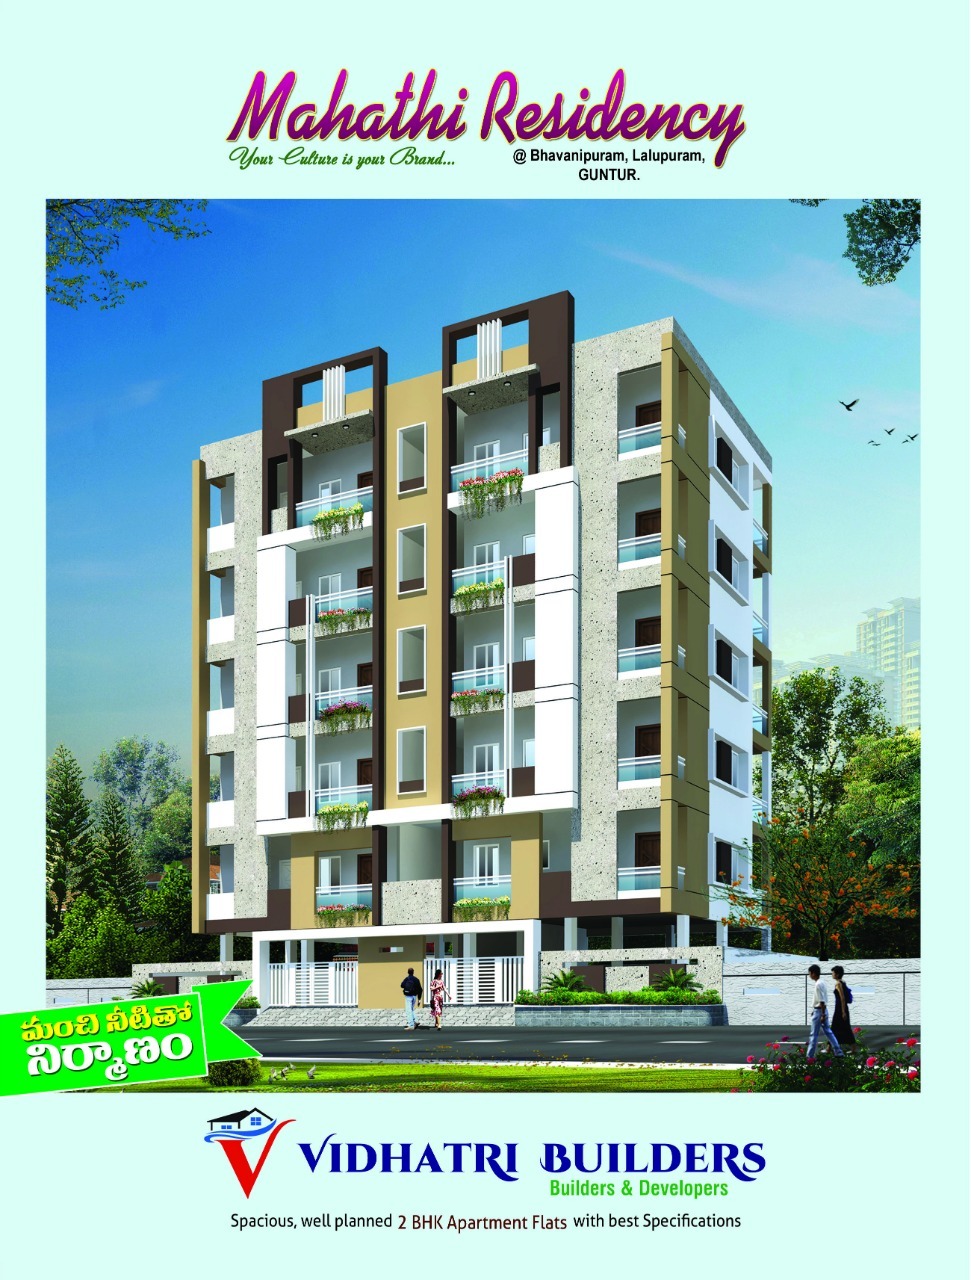 Green Grace Hi-Rise Apartments @ Pattabhipuram main raod Guntur - YouTube